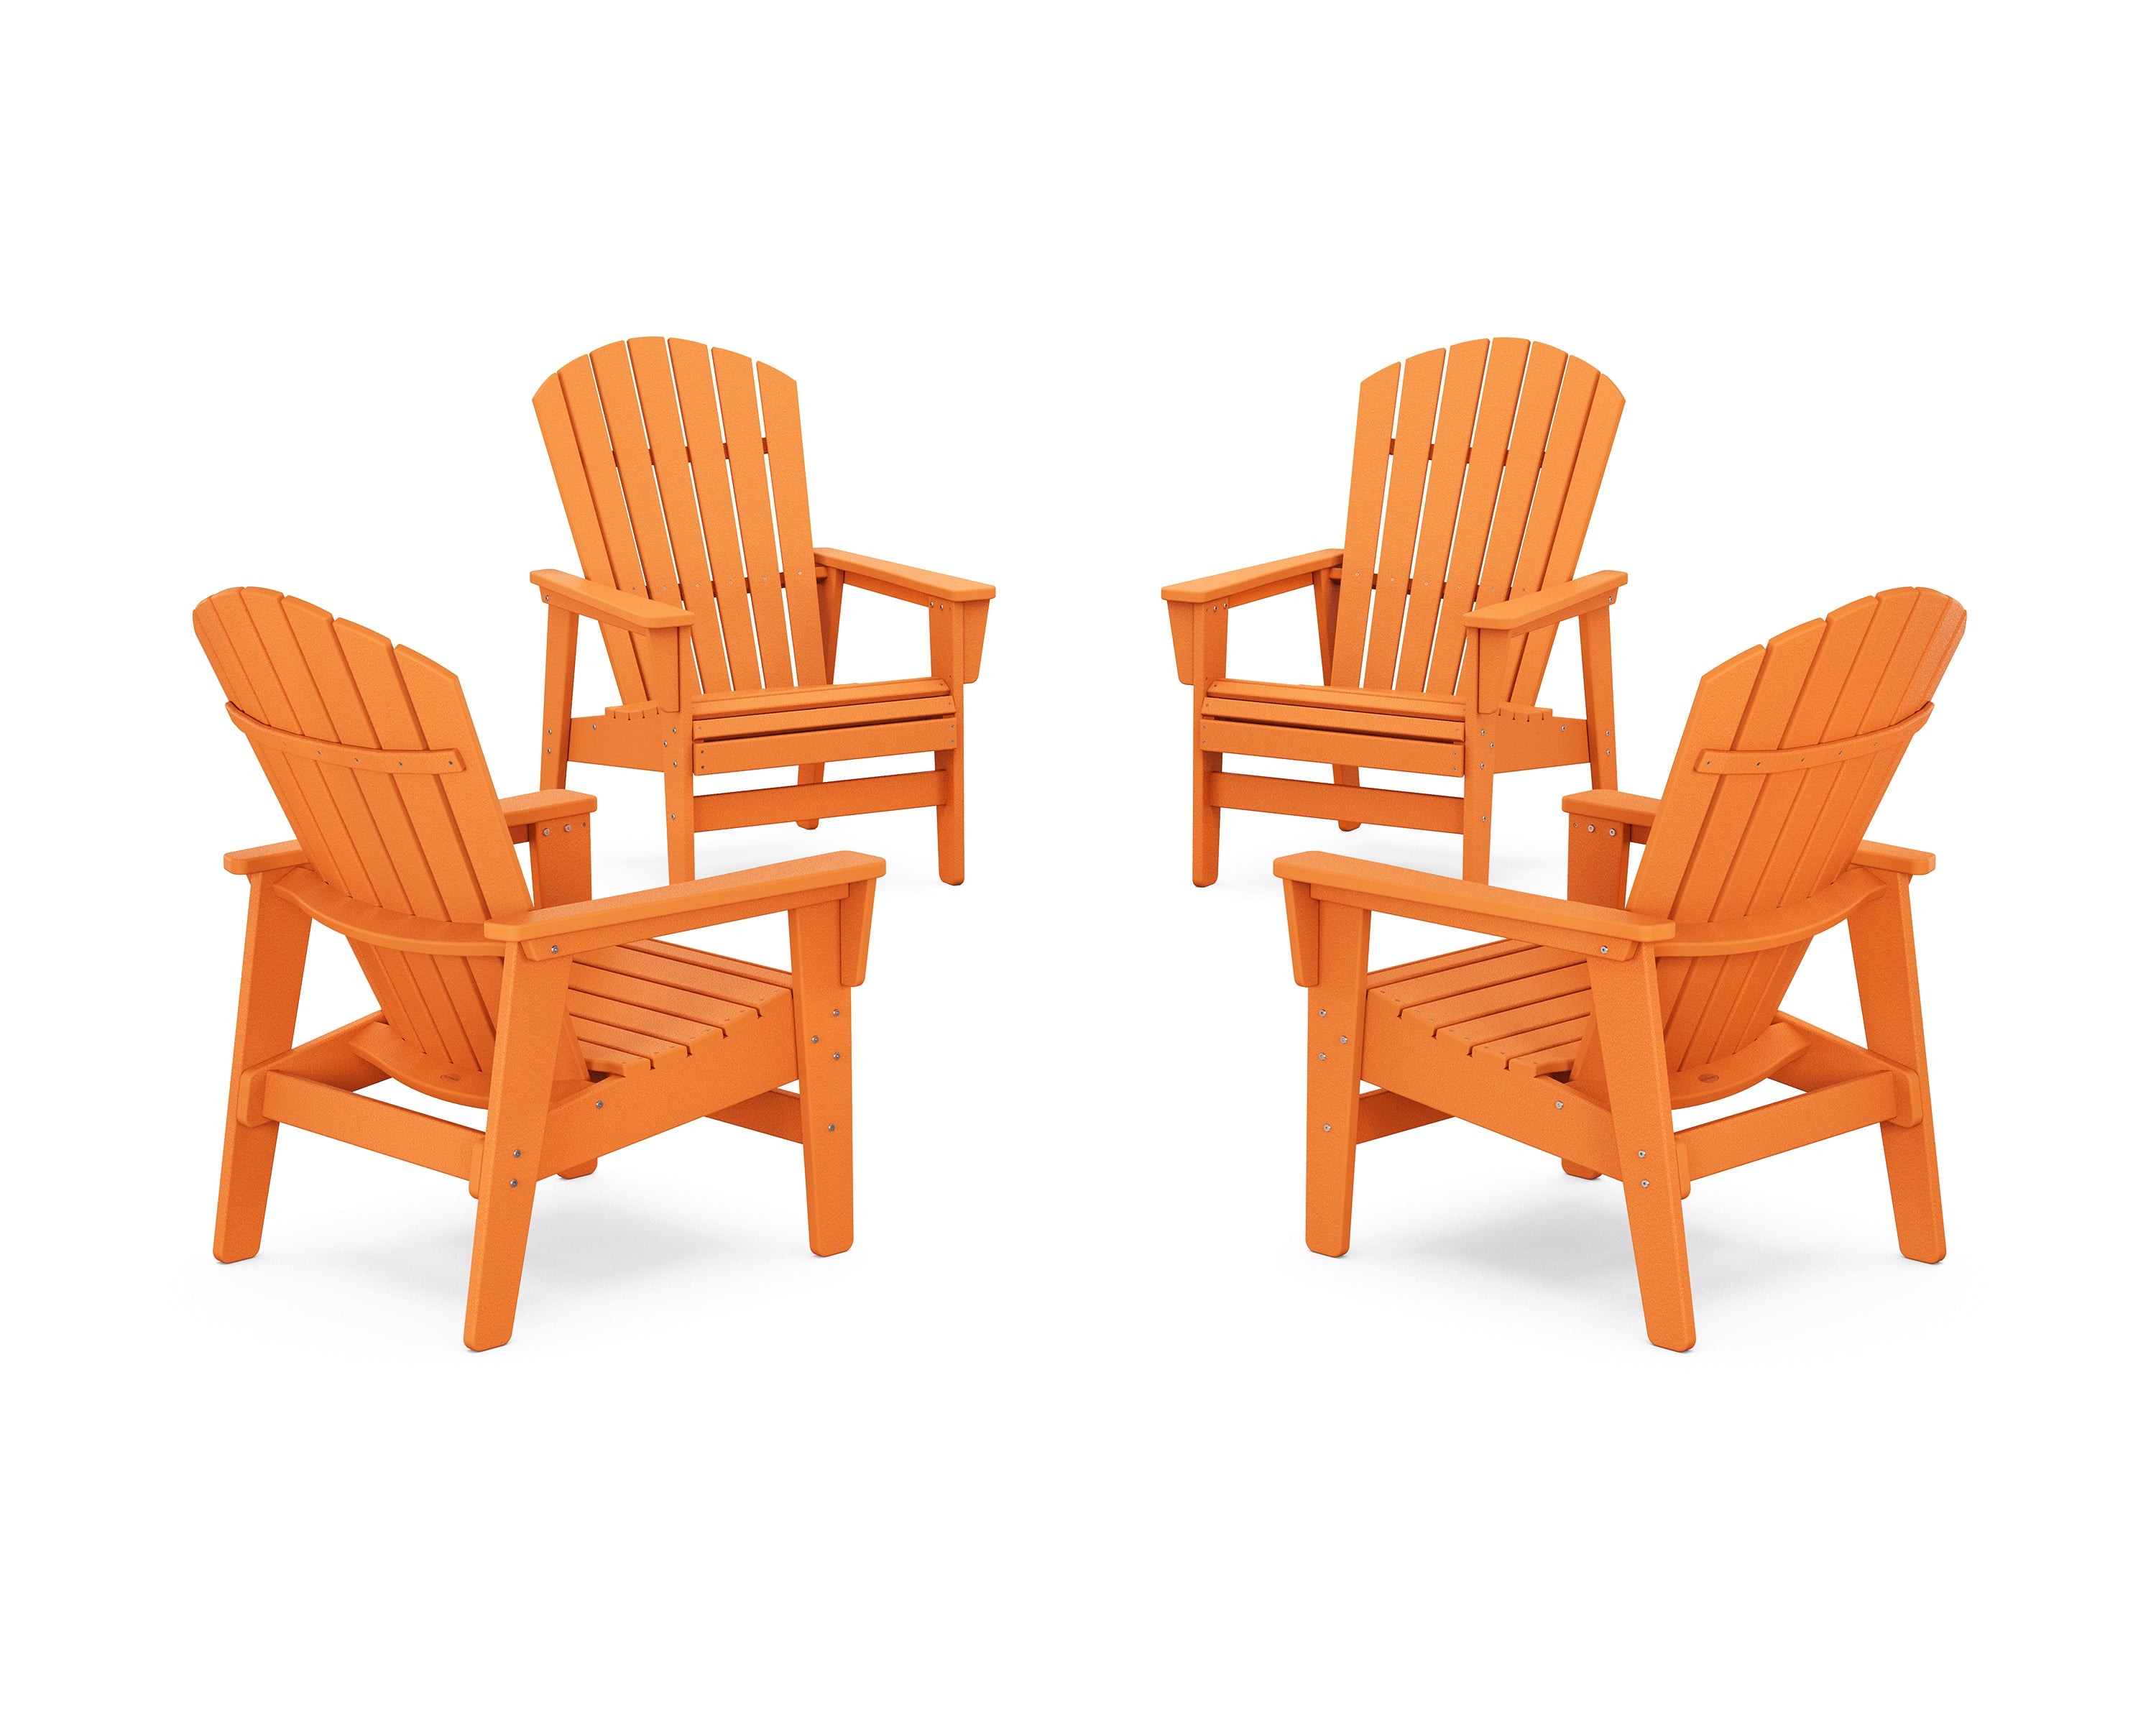 POLYWOOD® 4-Piece Nautical Grand Upright Adirondack Chair Conversation Set in Tangerine